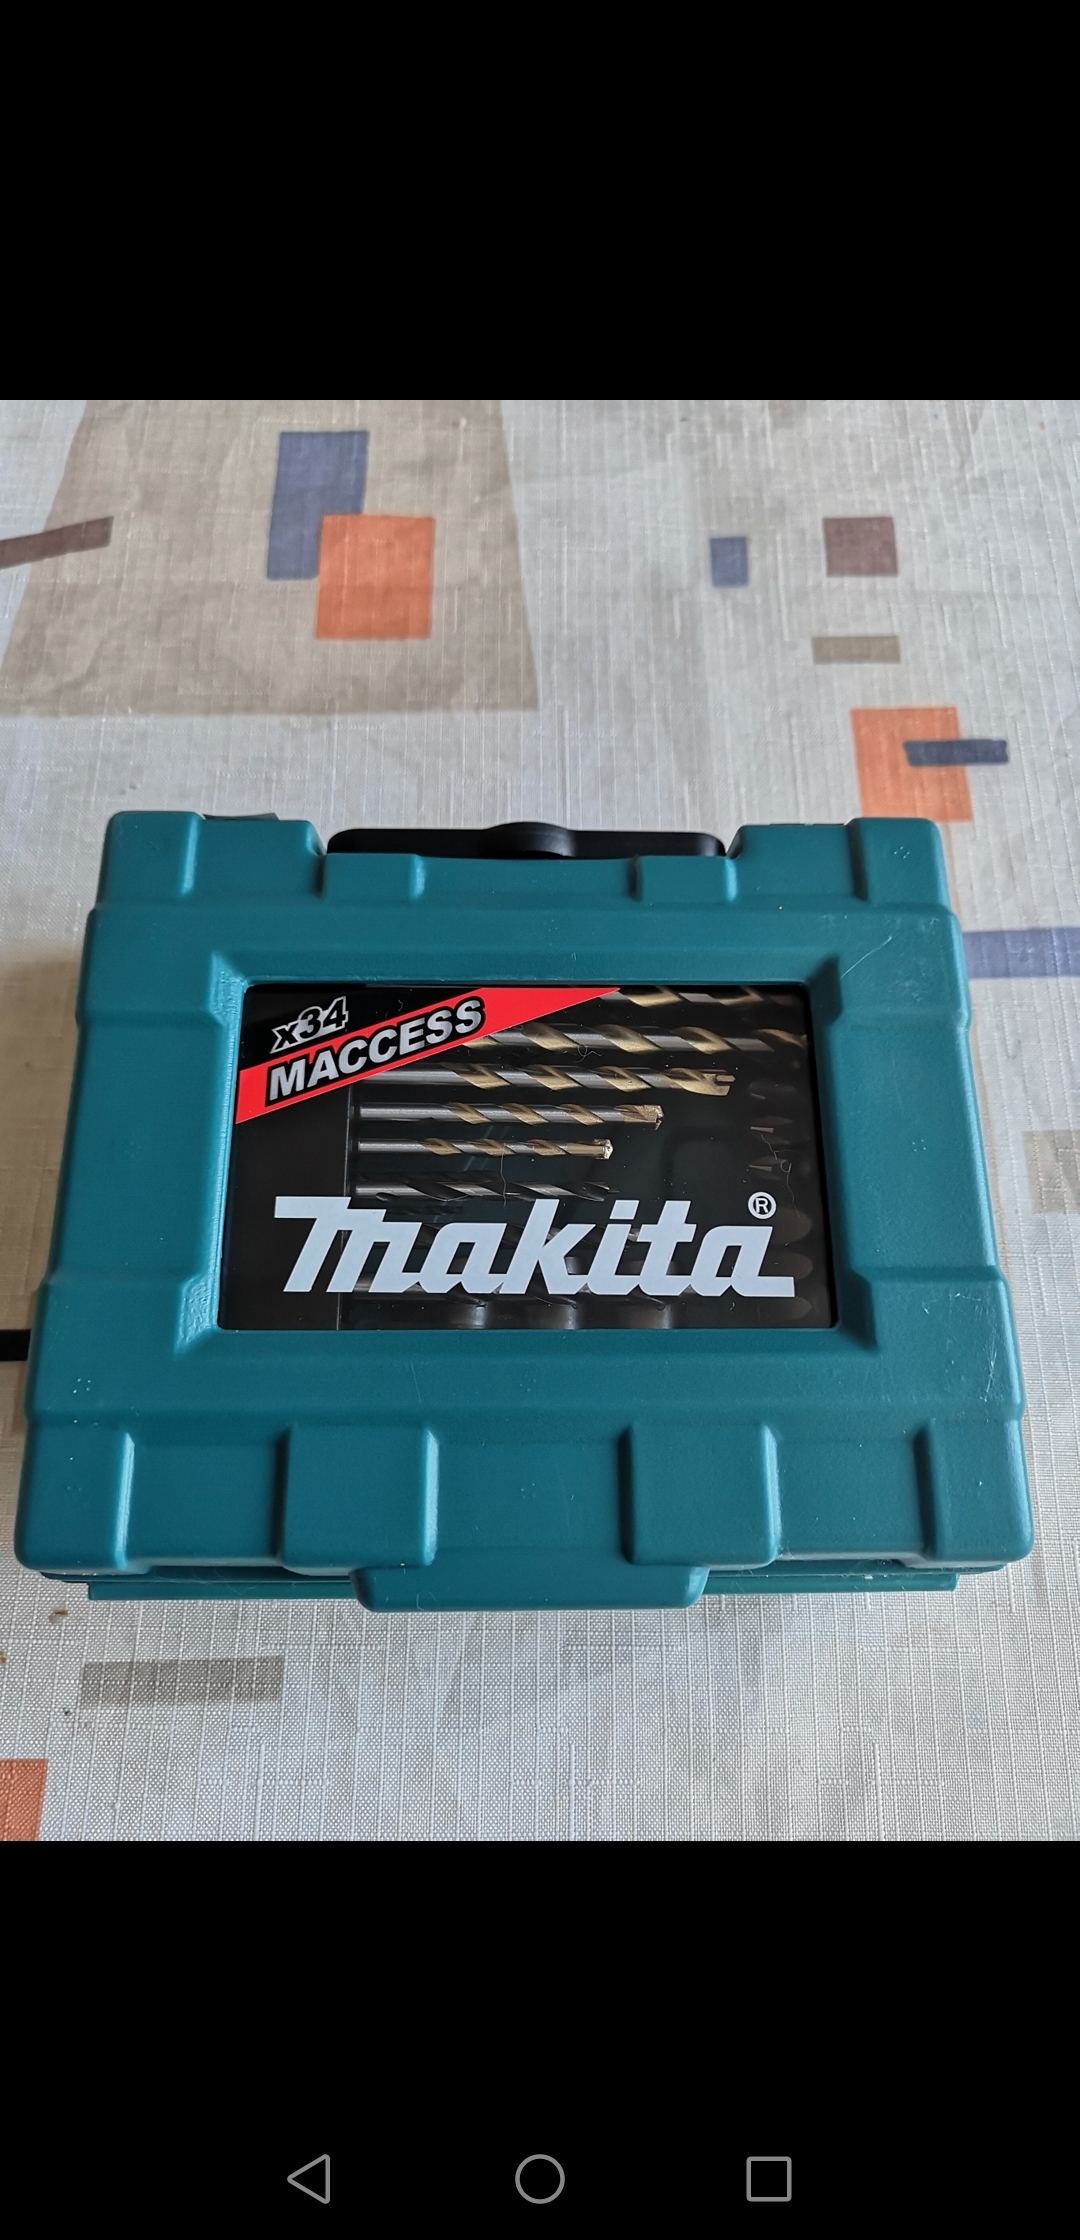  бит и сверл для дрелей, шуруповертов Makita D-36980  в .